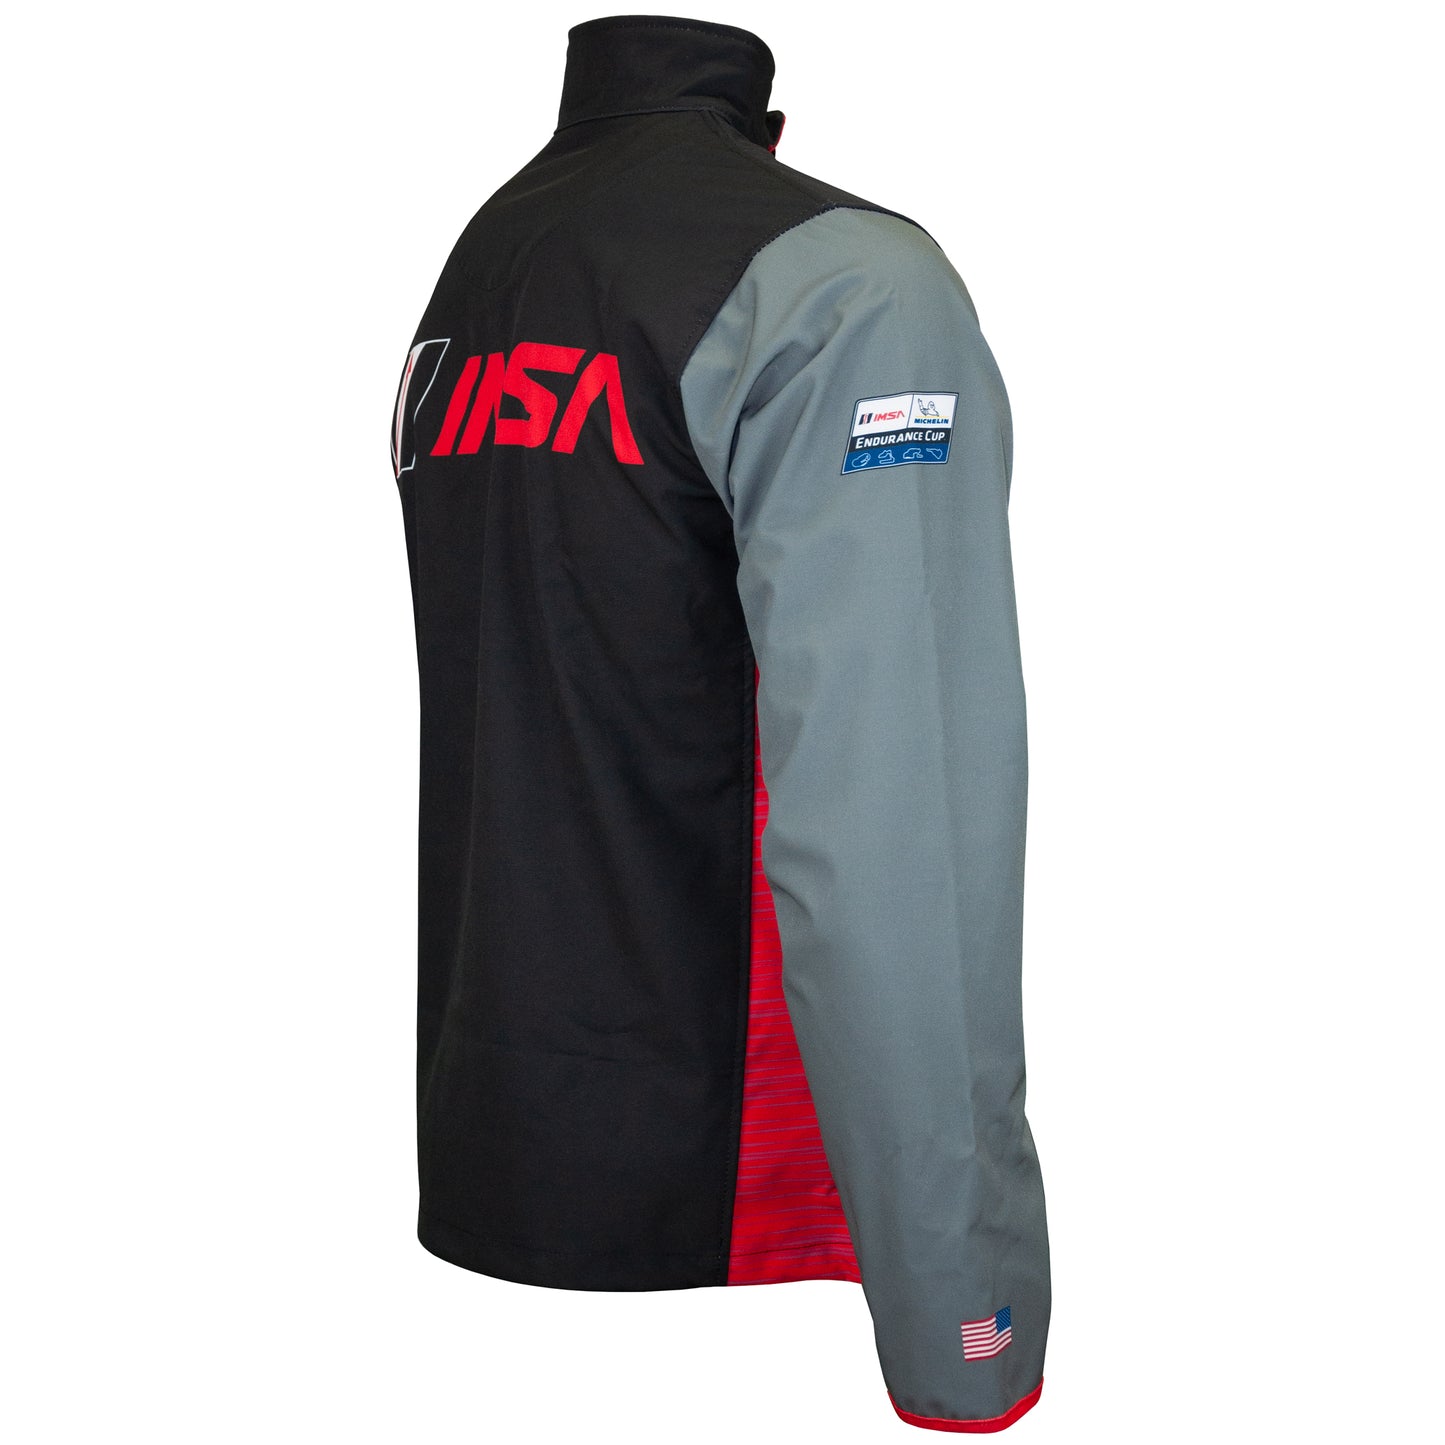 IMSA Soft Shell Jacket - Black/Charcoal/Red